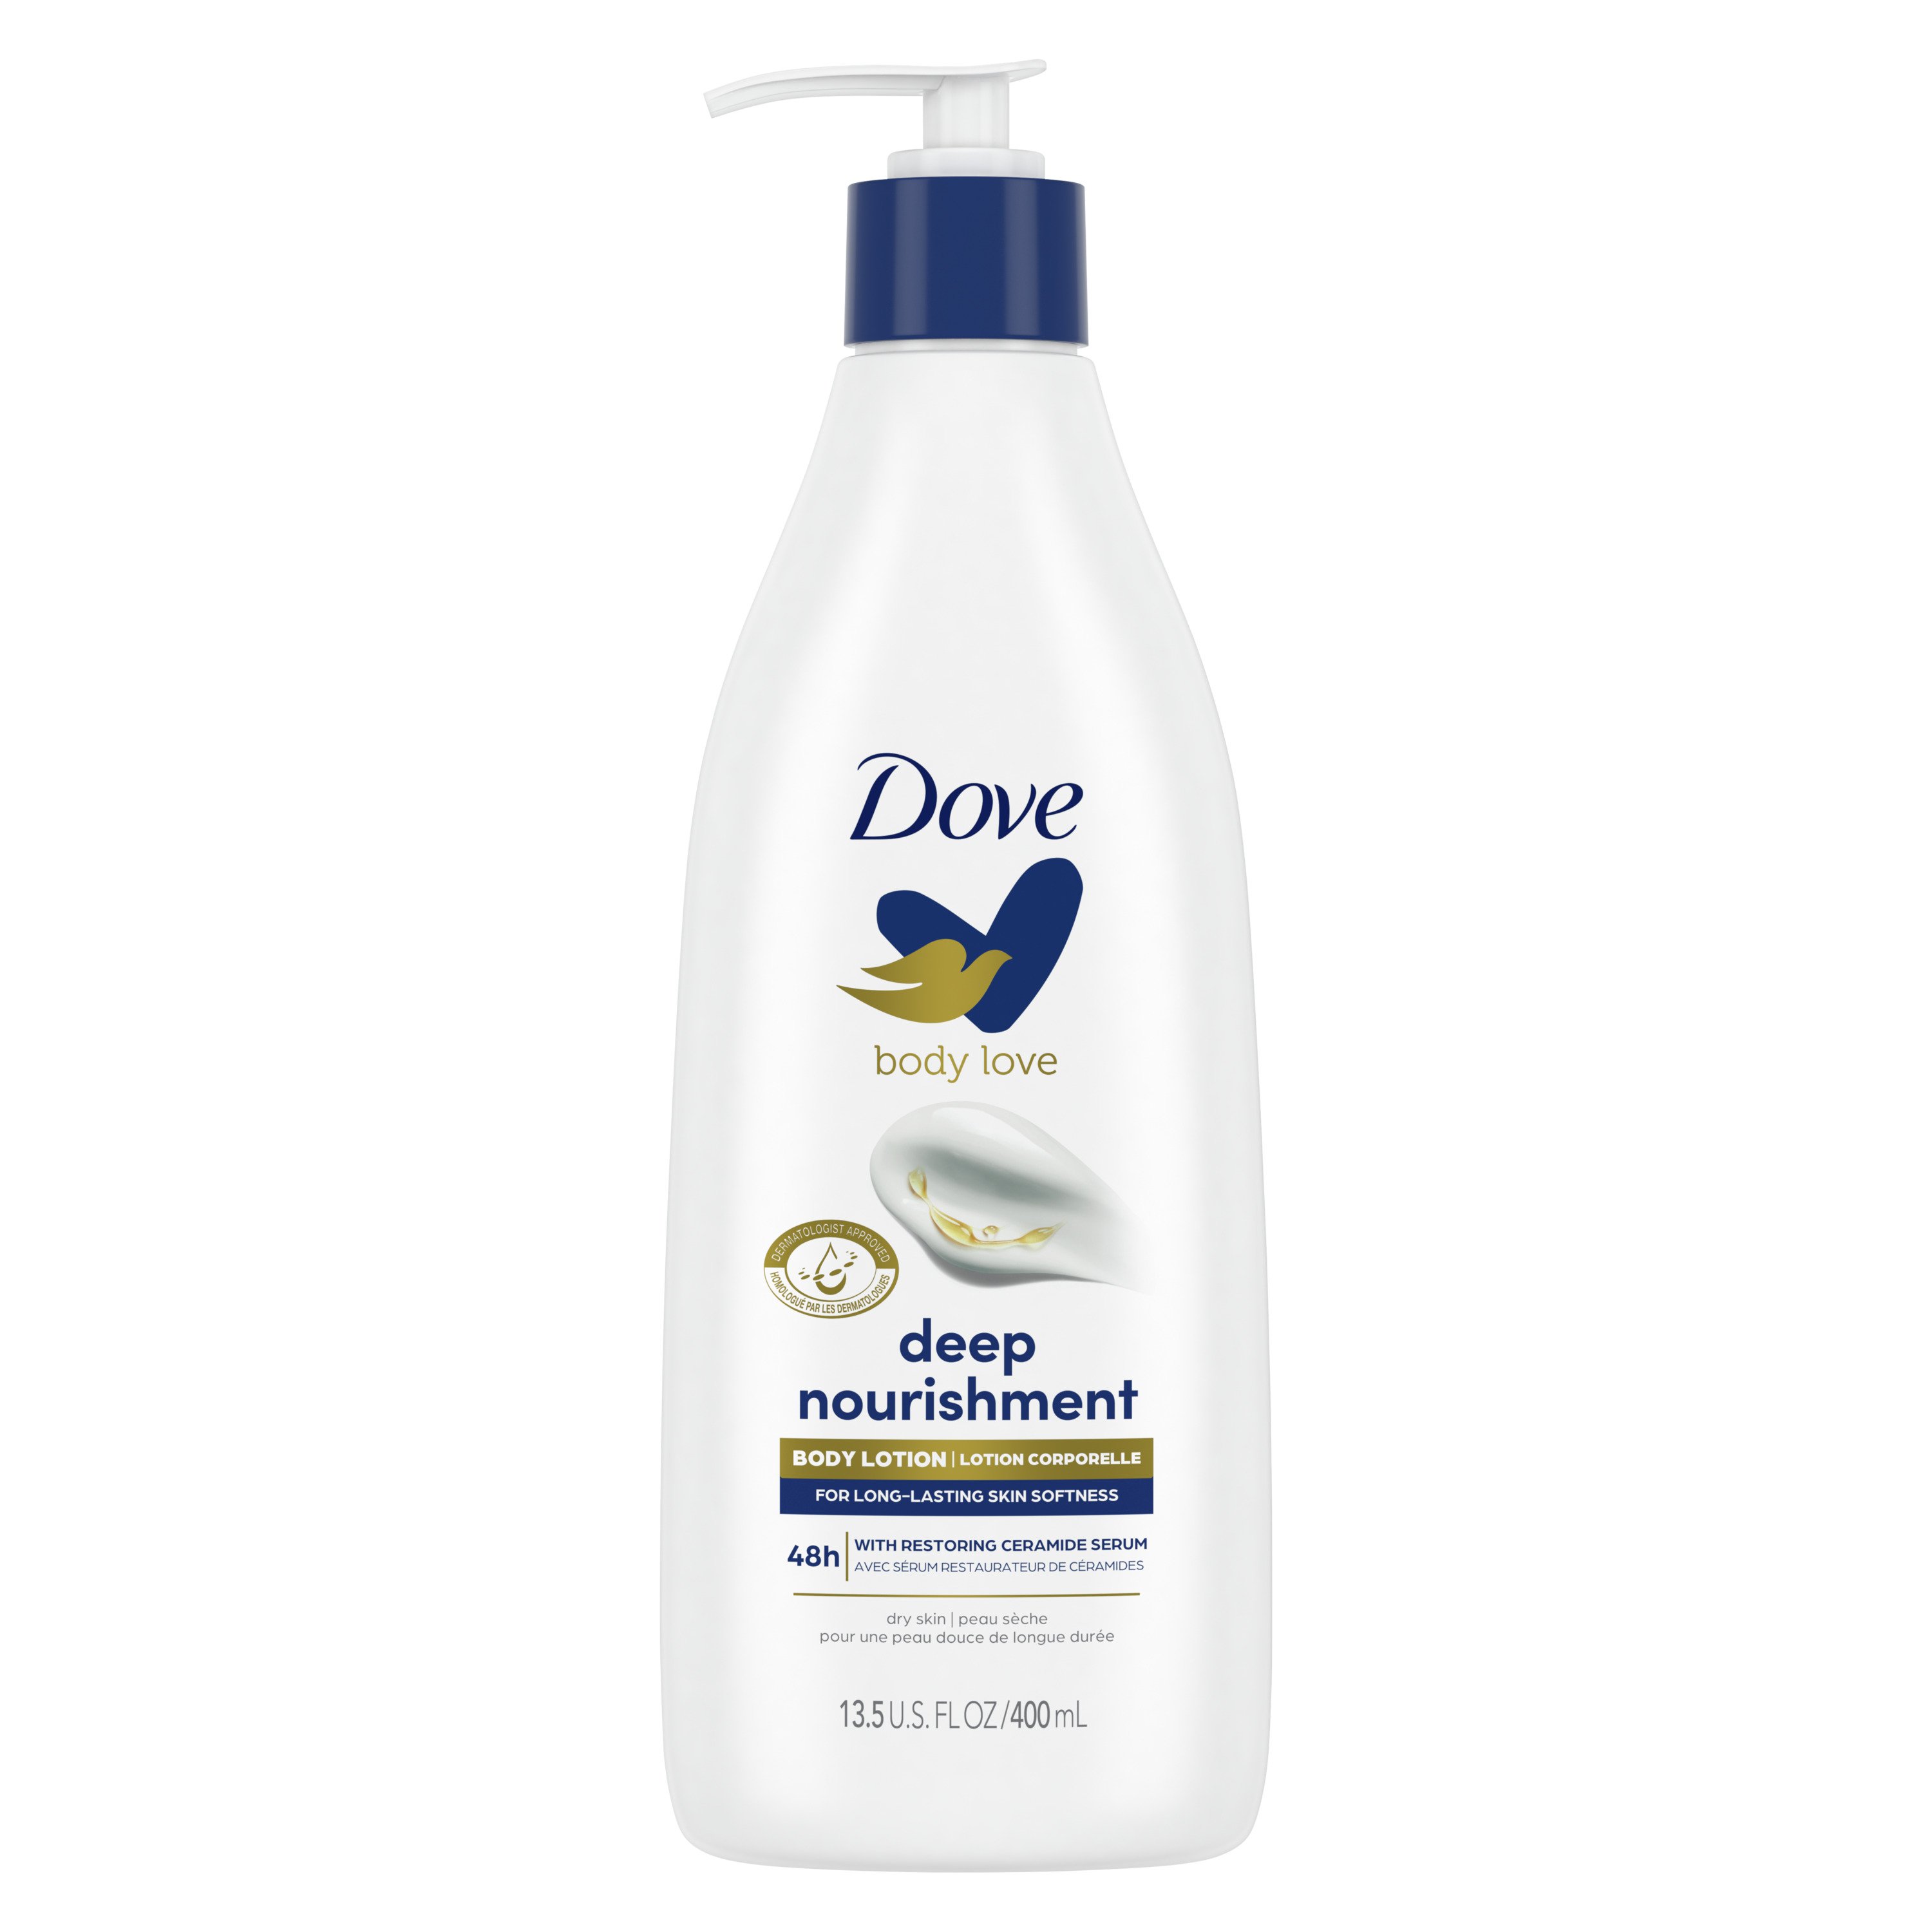 Dove Body Love Intense Care Moisturizing Lotion - Bath & Skin Care at H-E-B